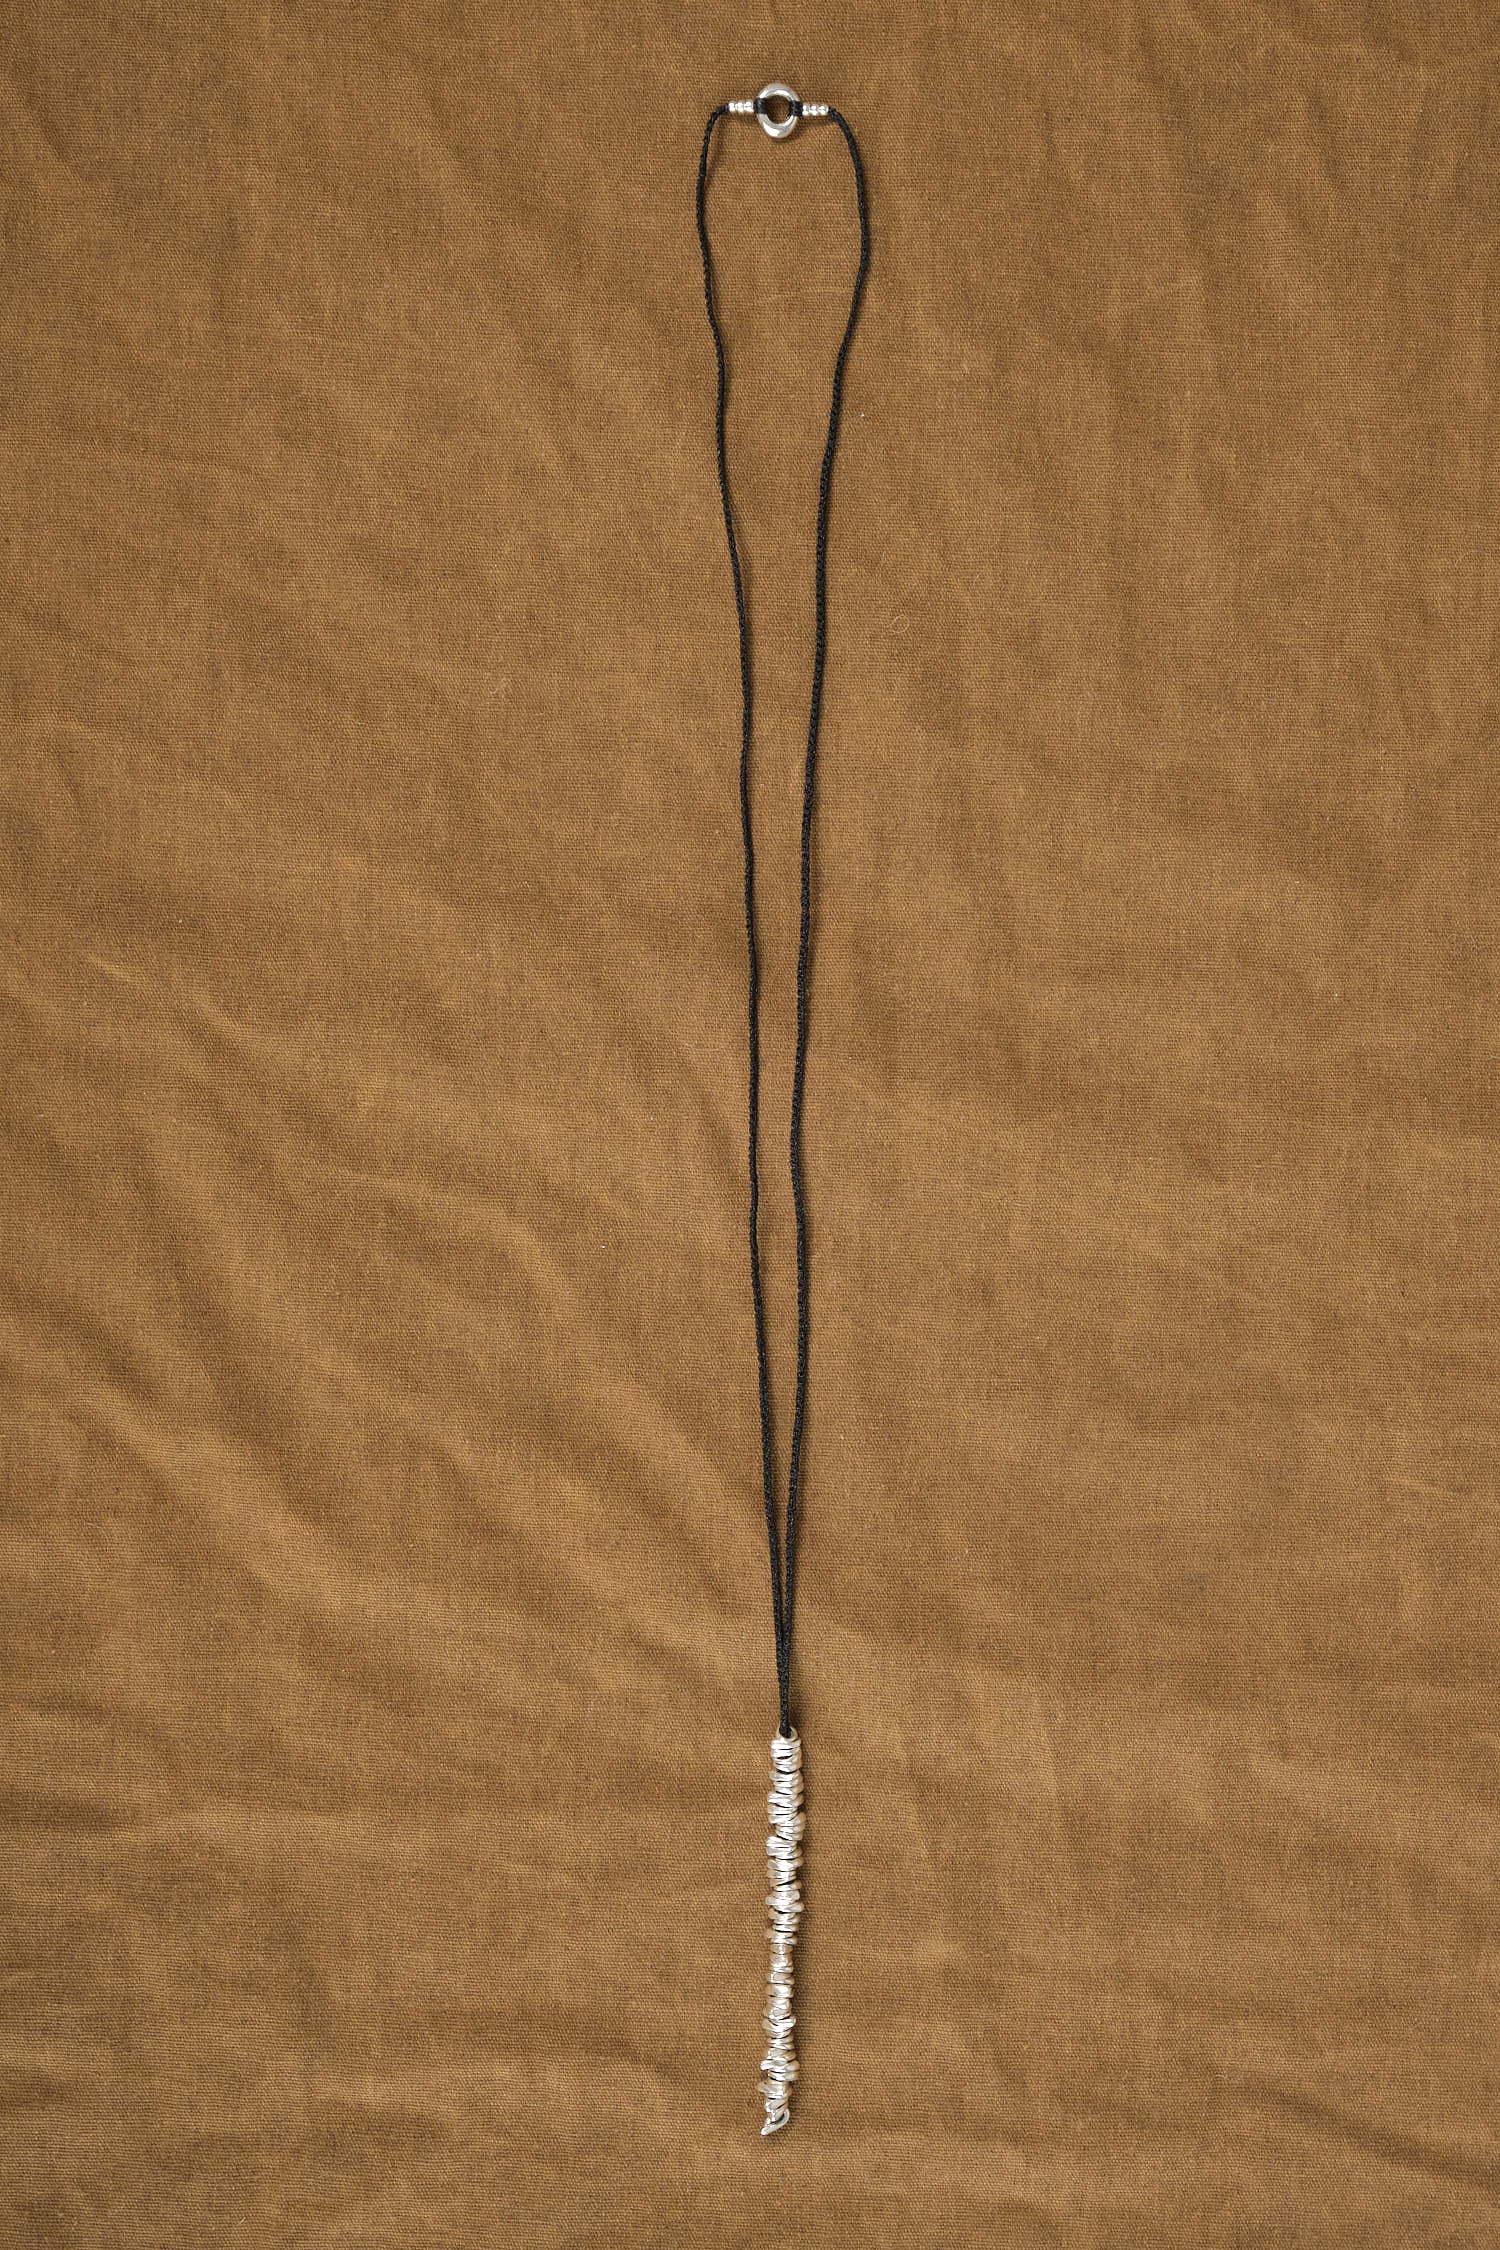 Birdbone on Long Gortex Necklace long